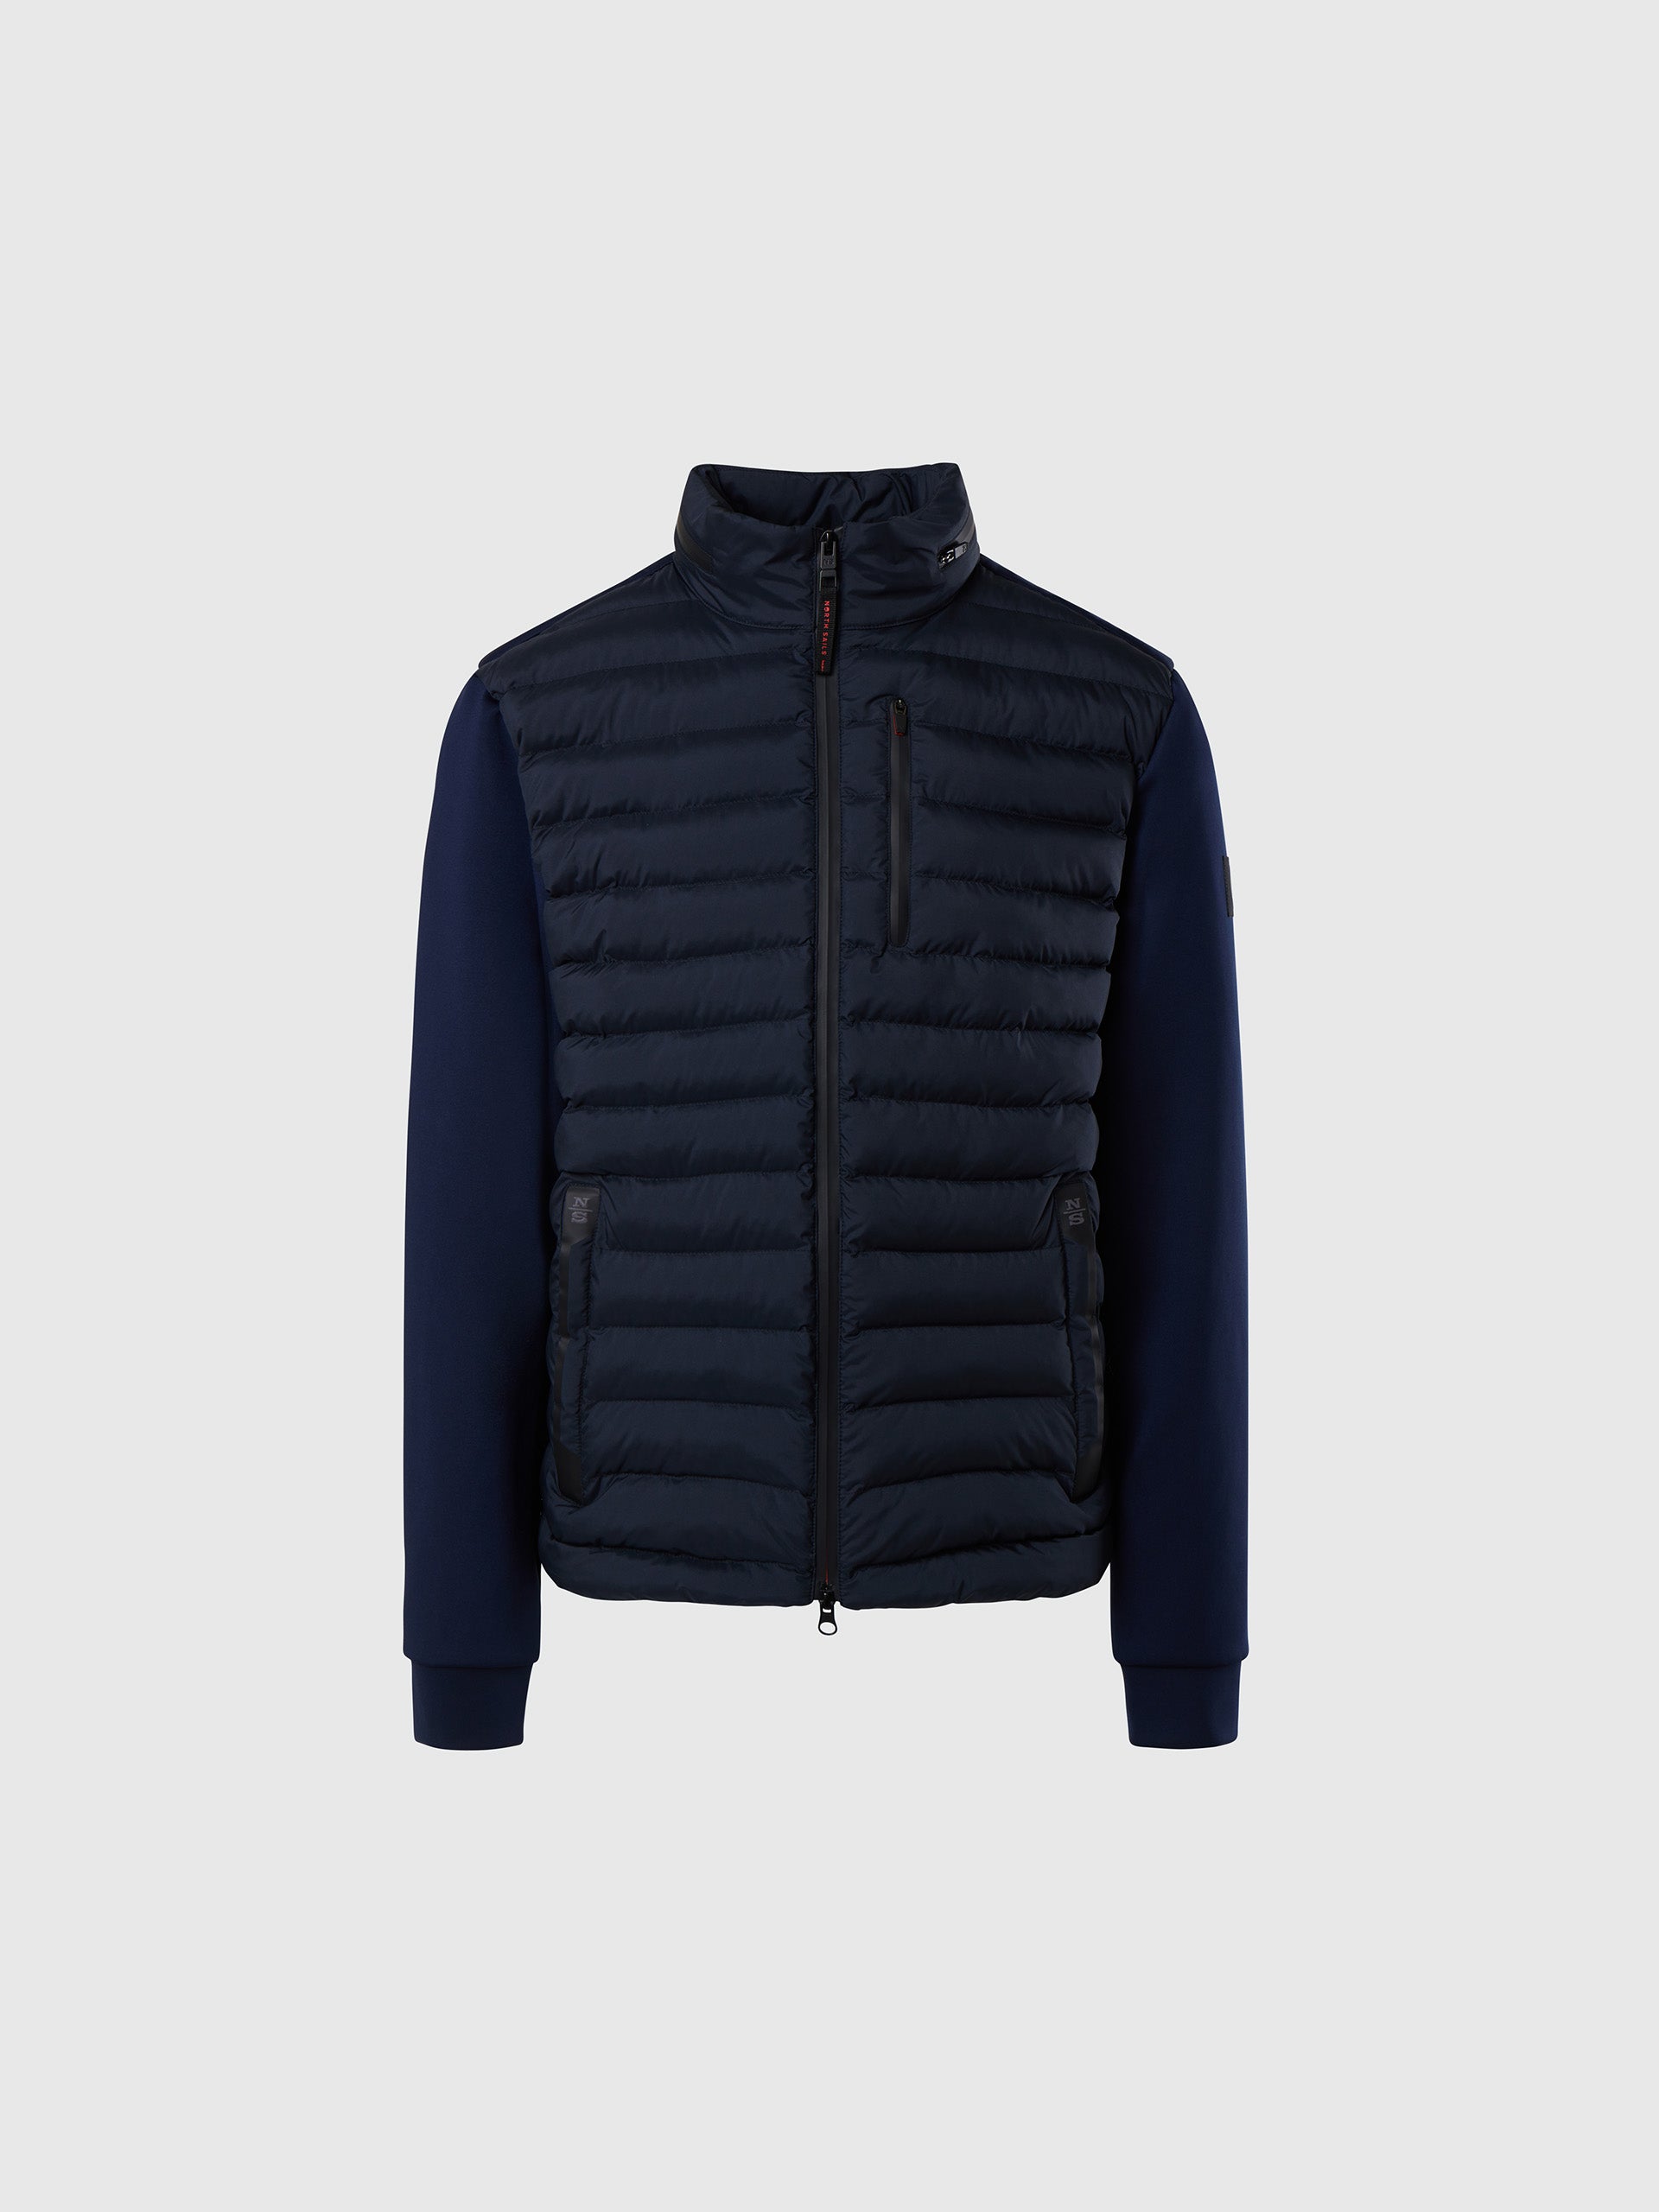 NORTH SAILS - Men's Olden jacket - OT-6031370802 - navy